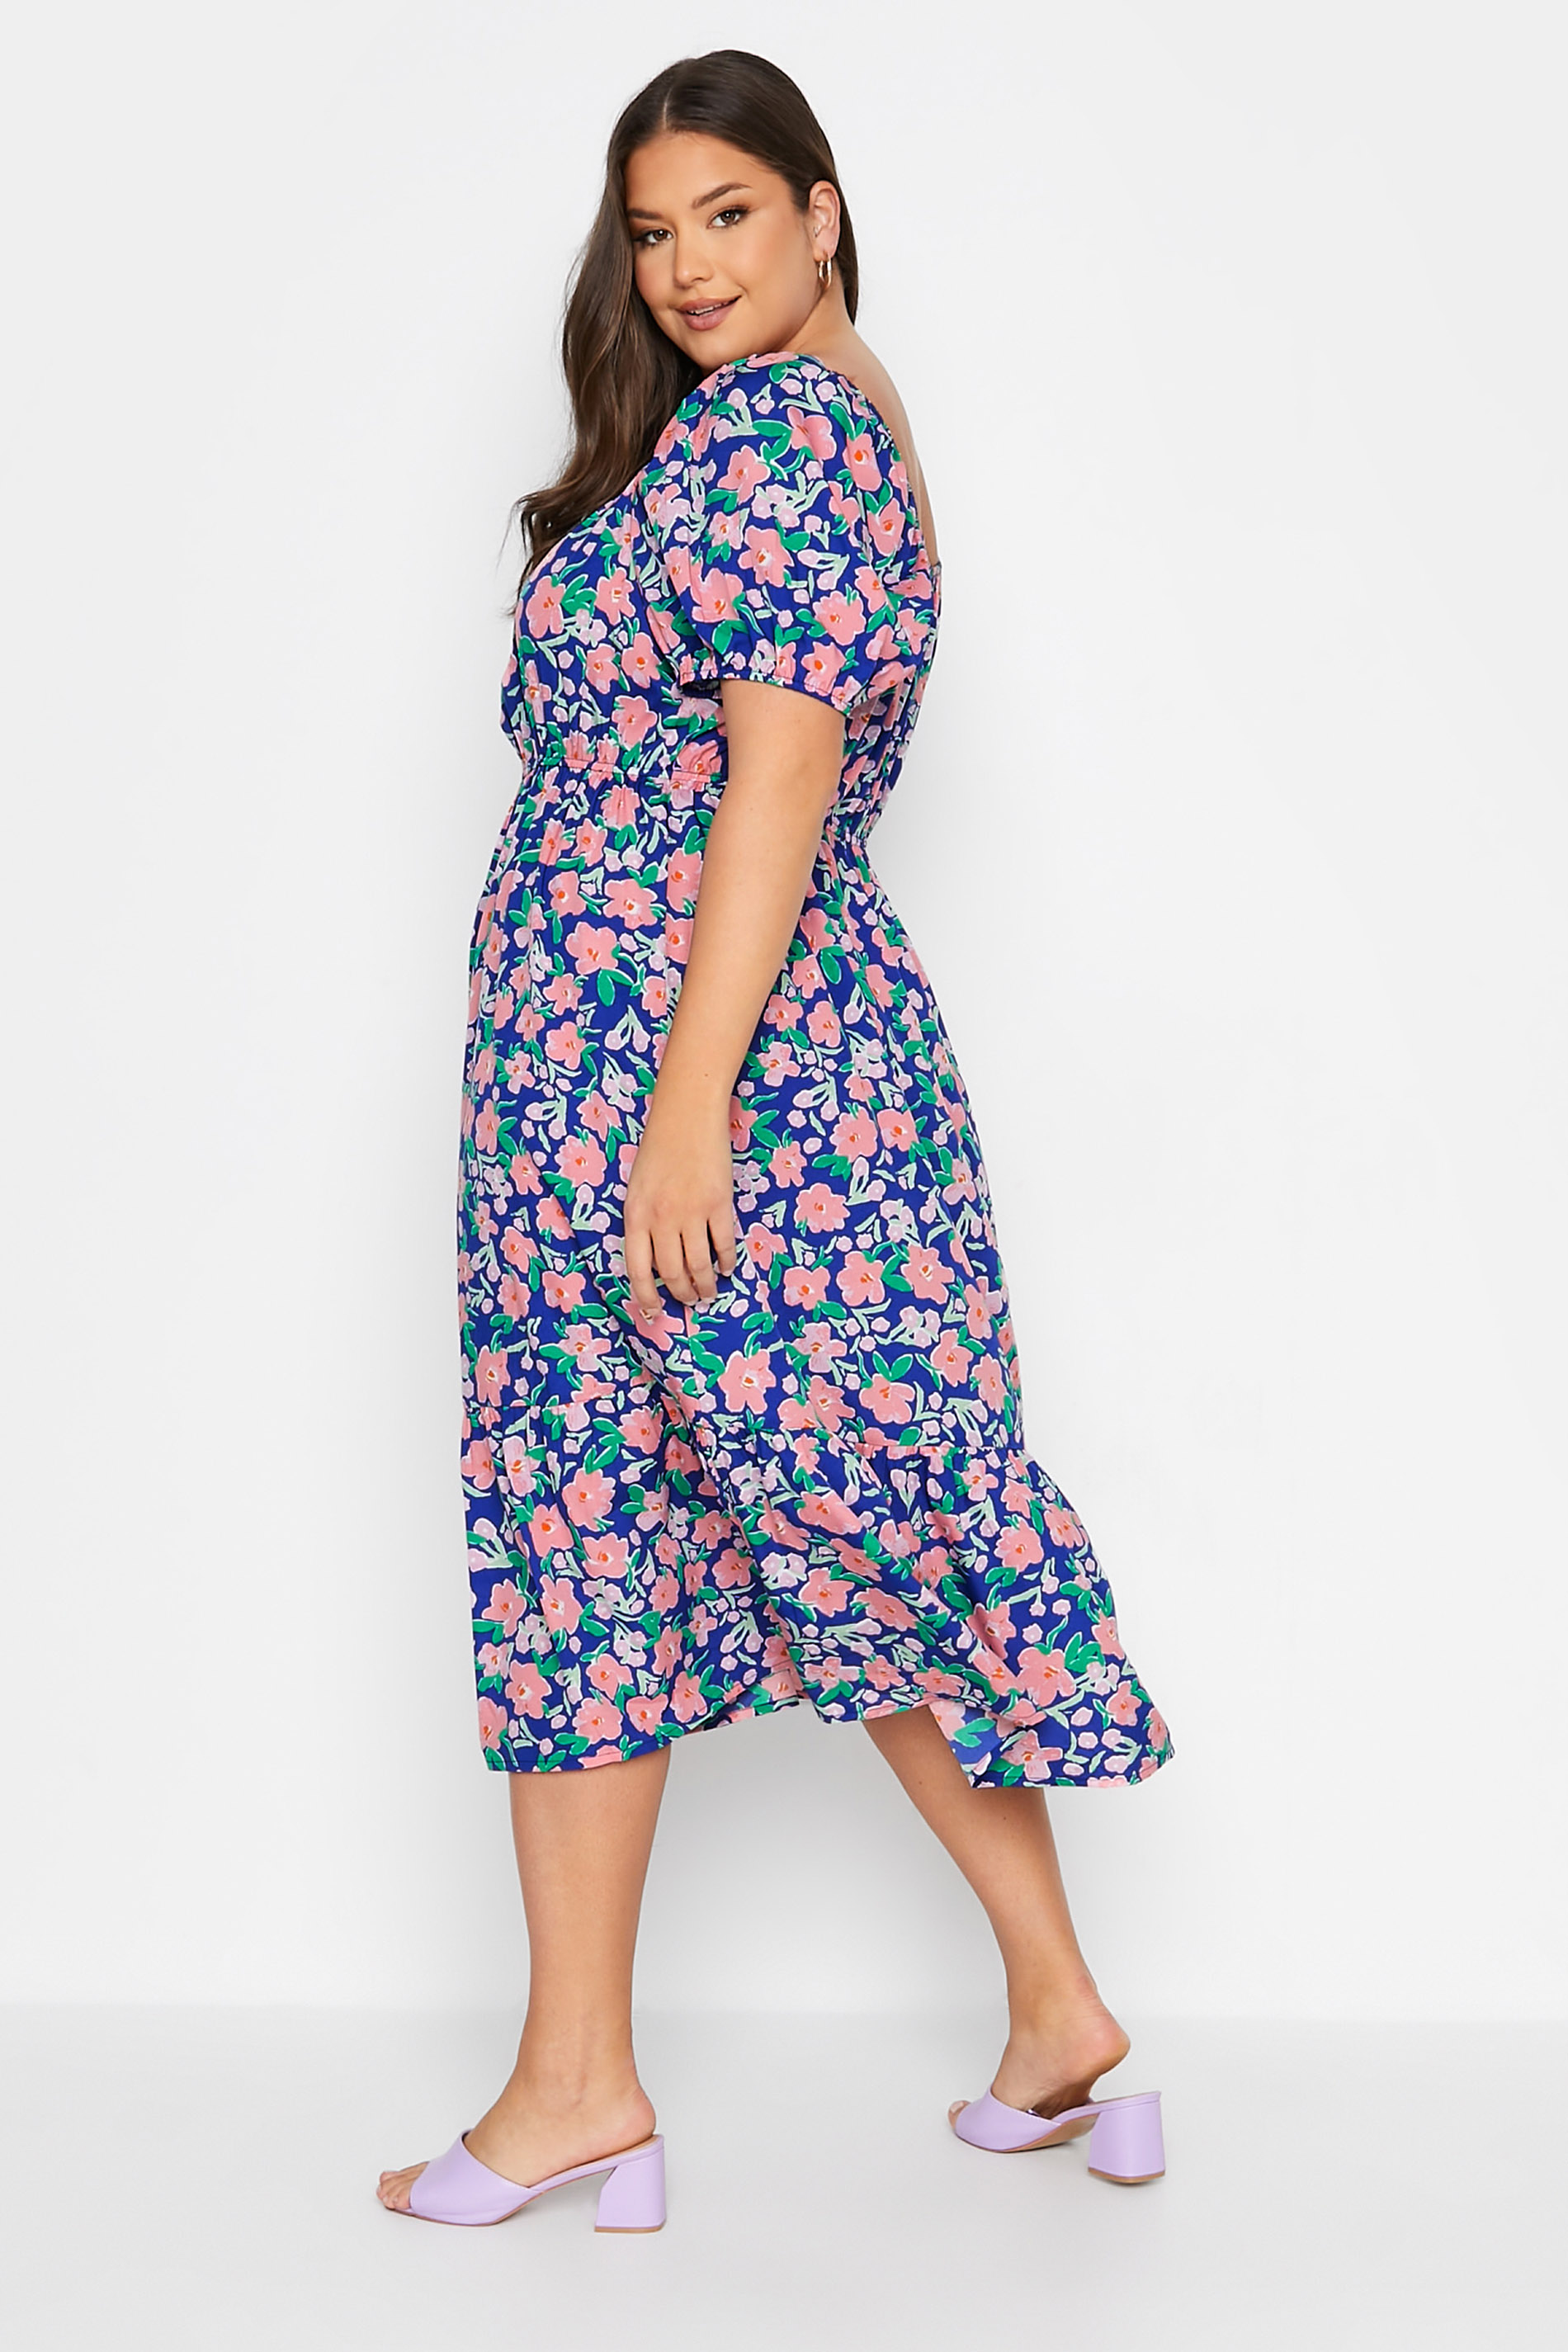 Plus Size Blue Floral Square Neck Midaxi Dress | Yours Clothing 3